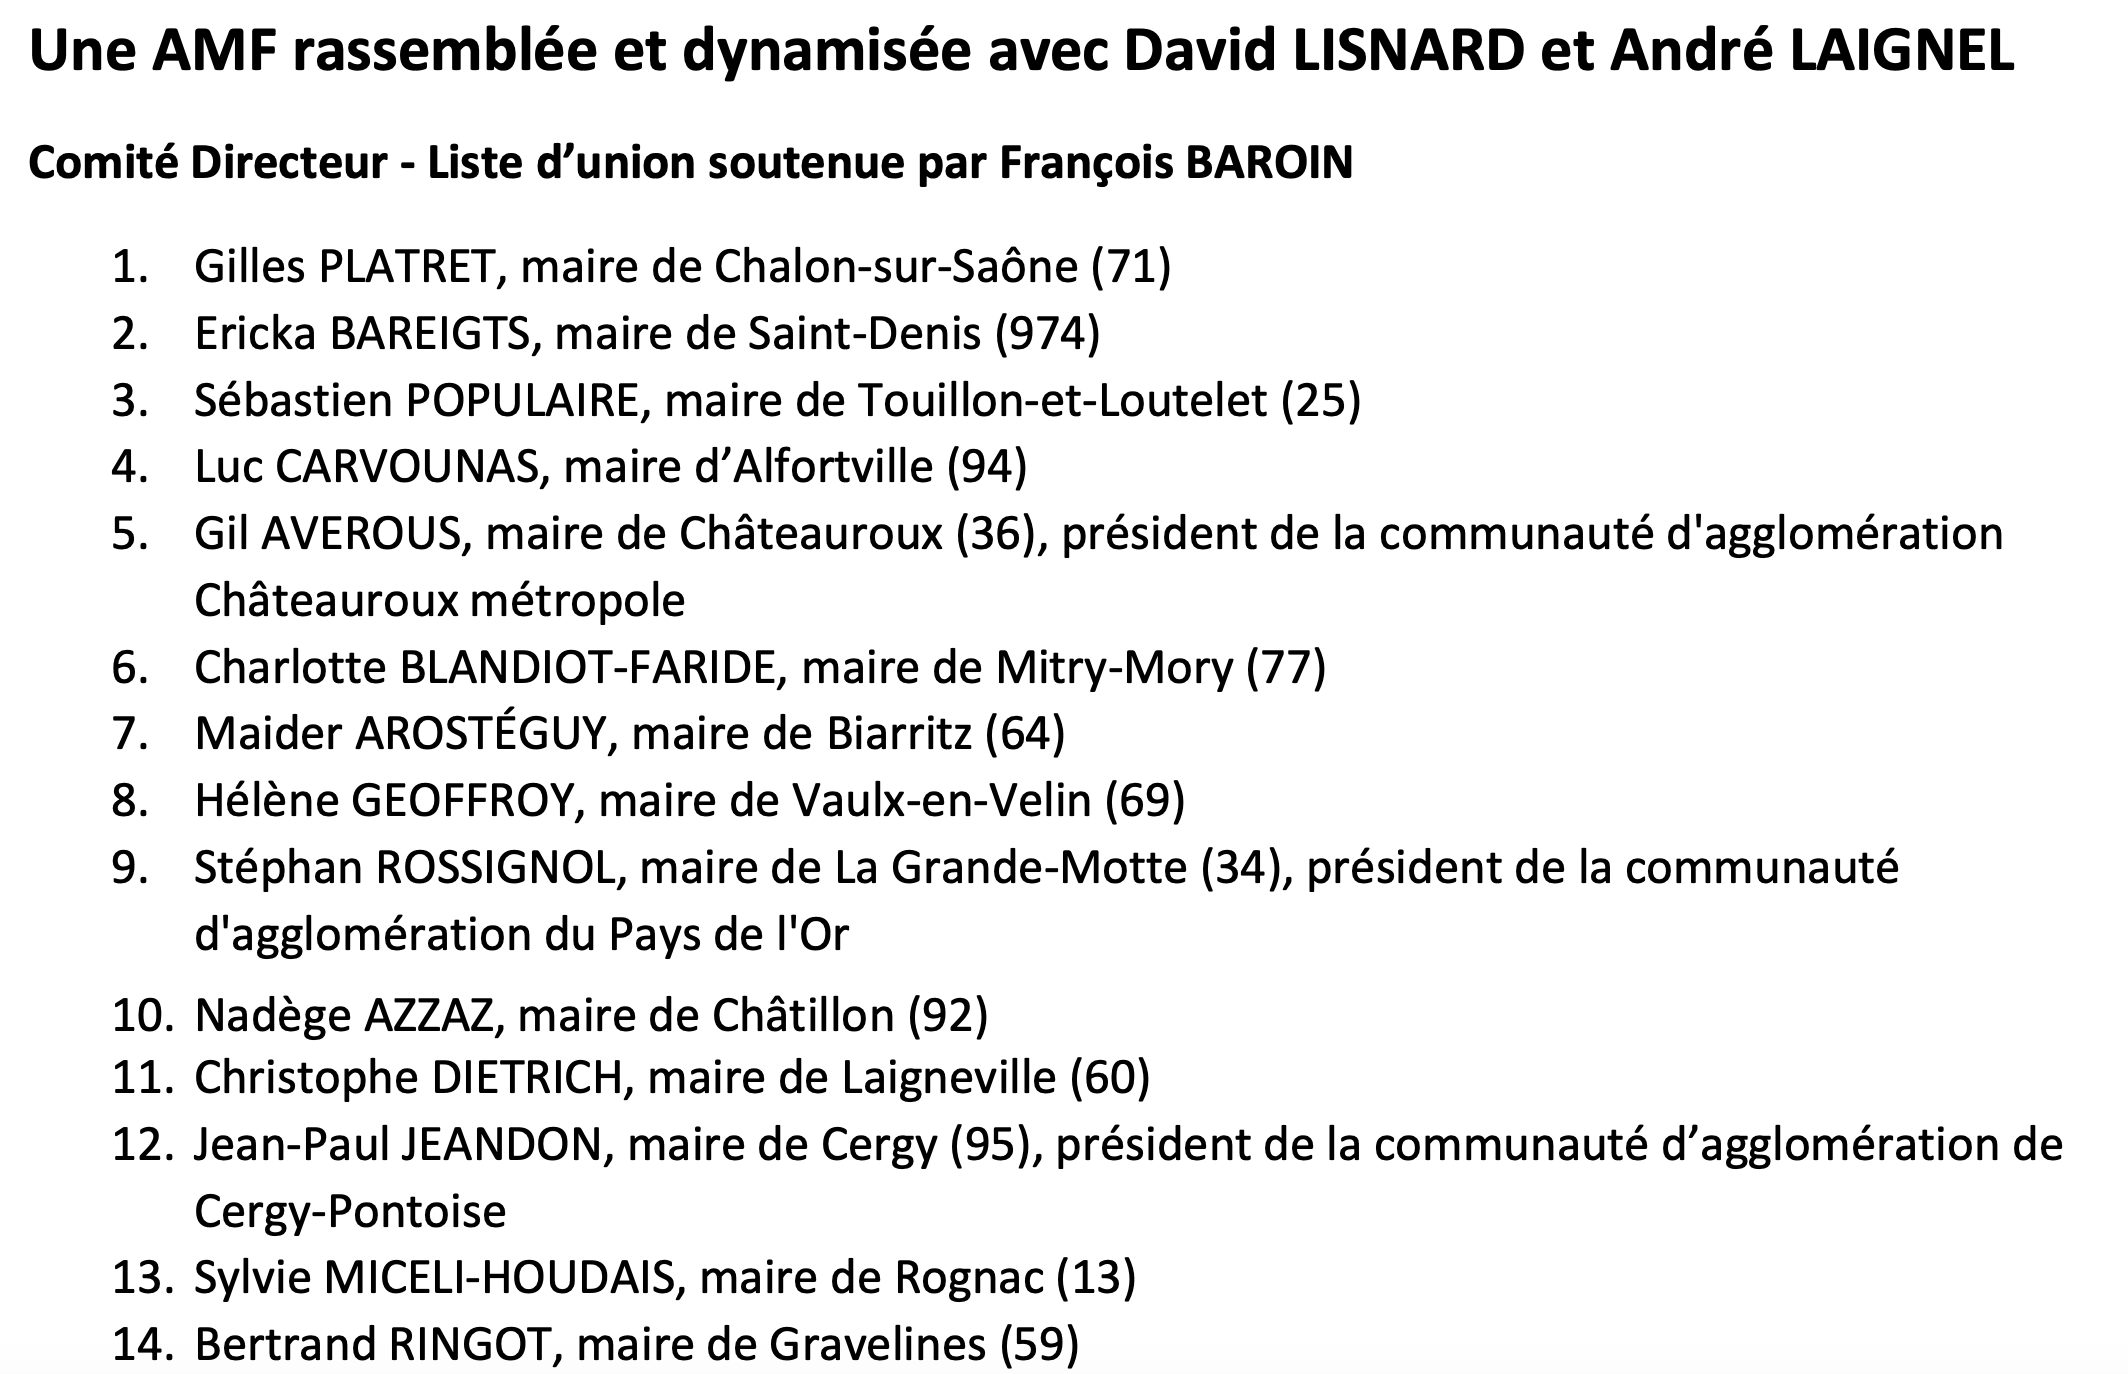 David Lisnard élu premier maire de France, Ericka Bareigts fera partie de l'AMF